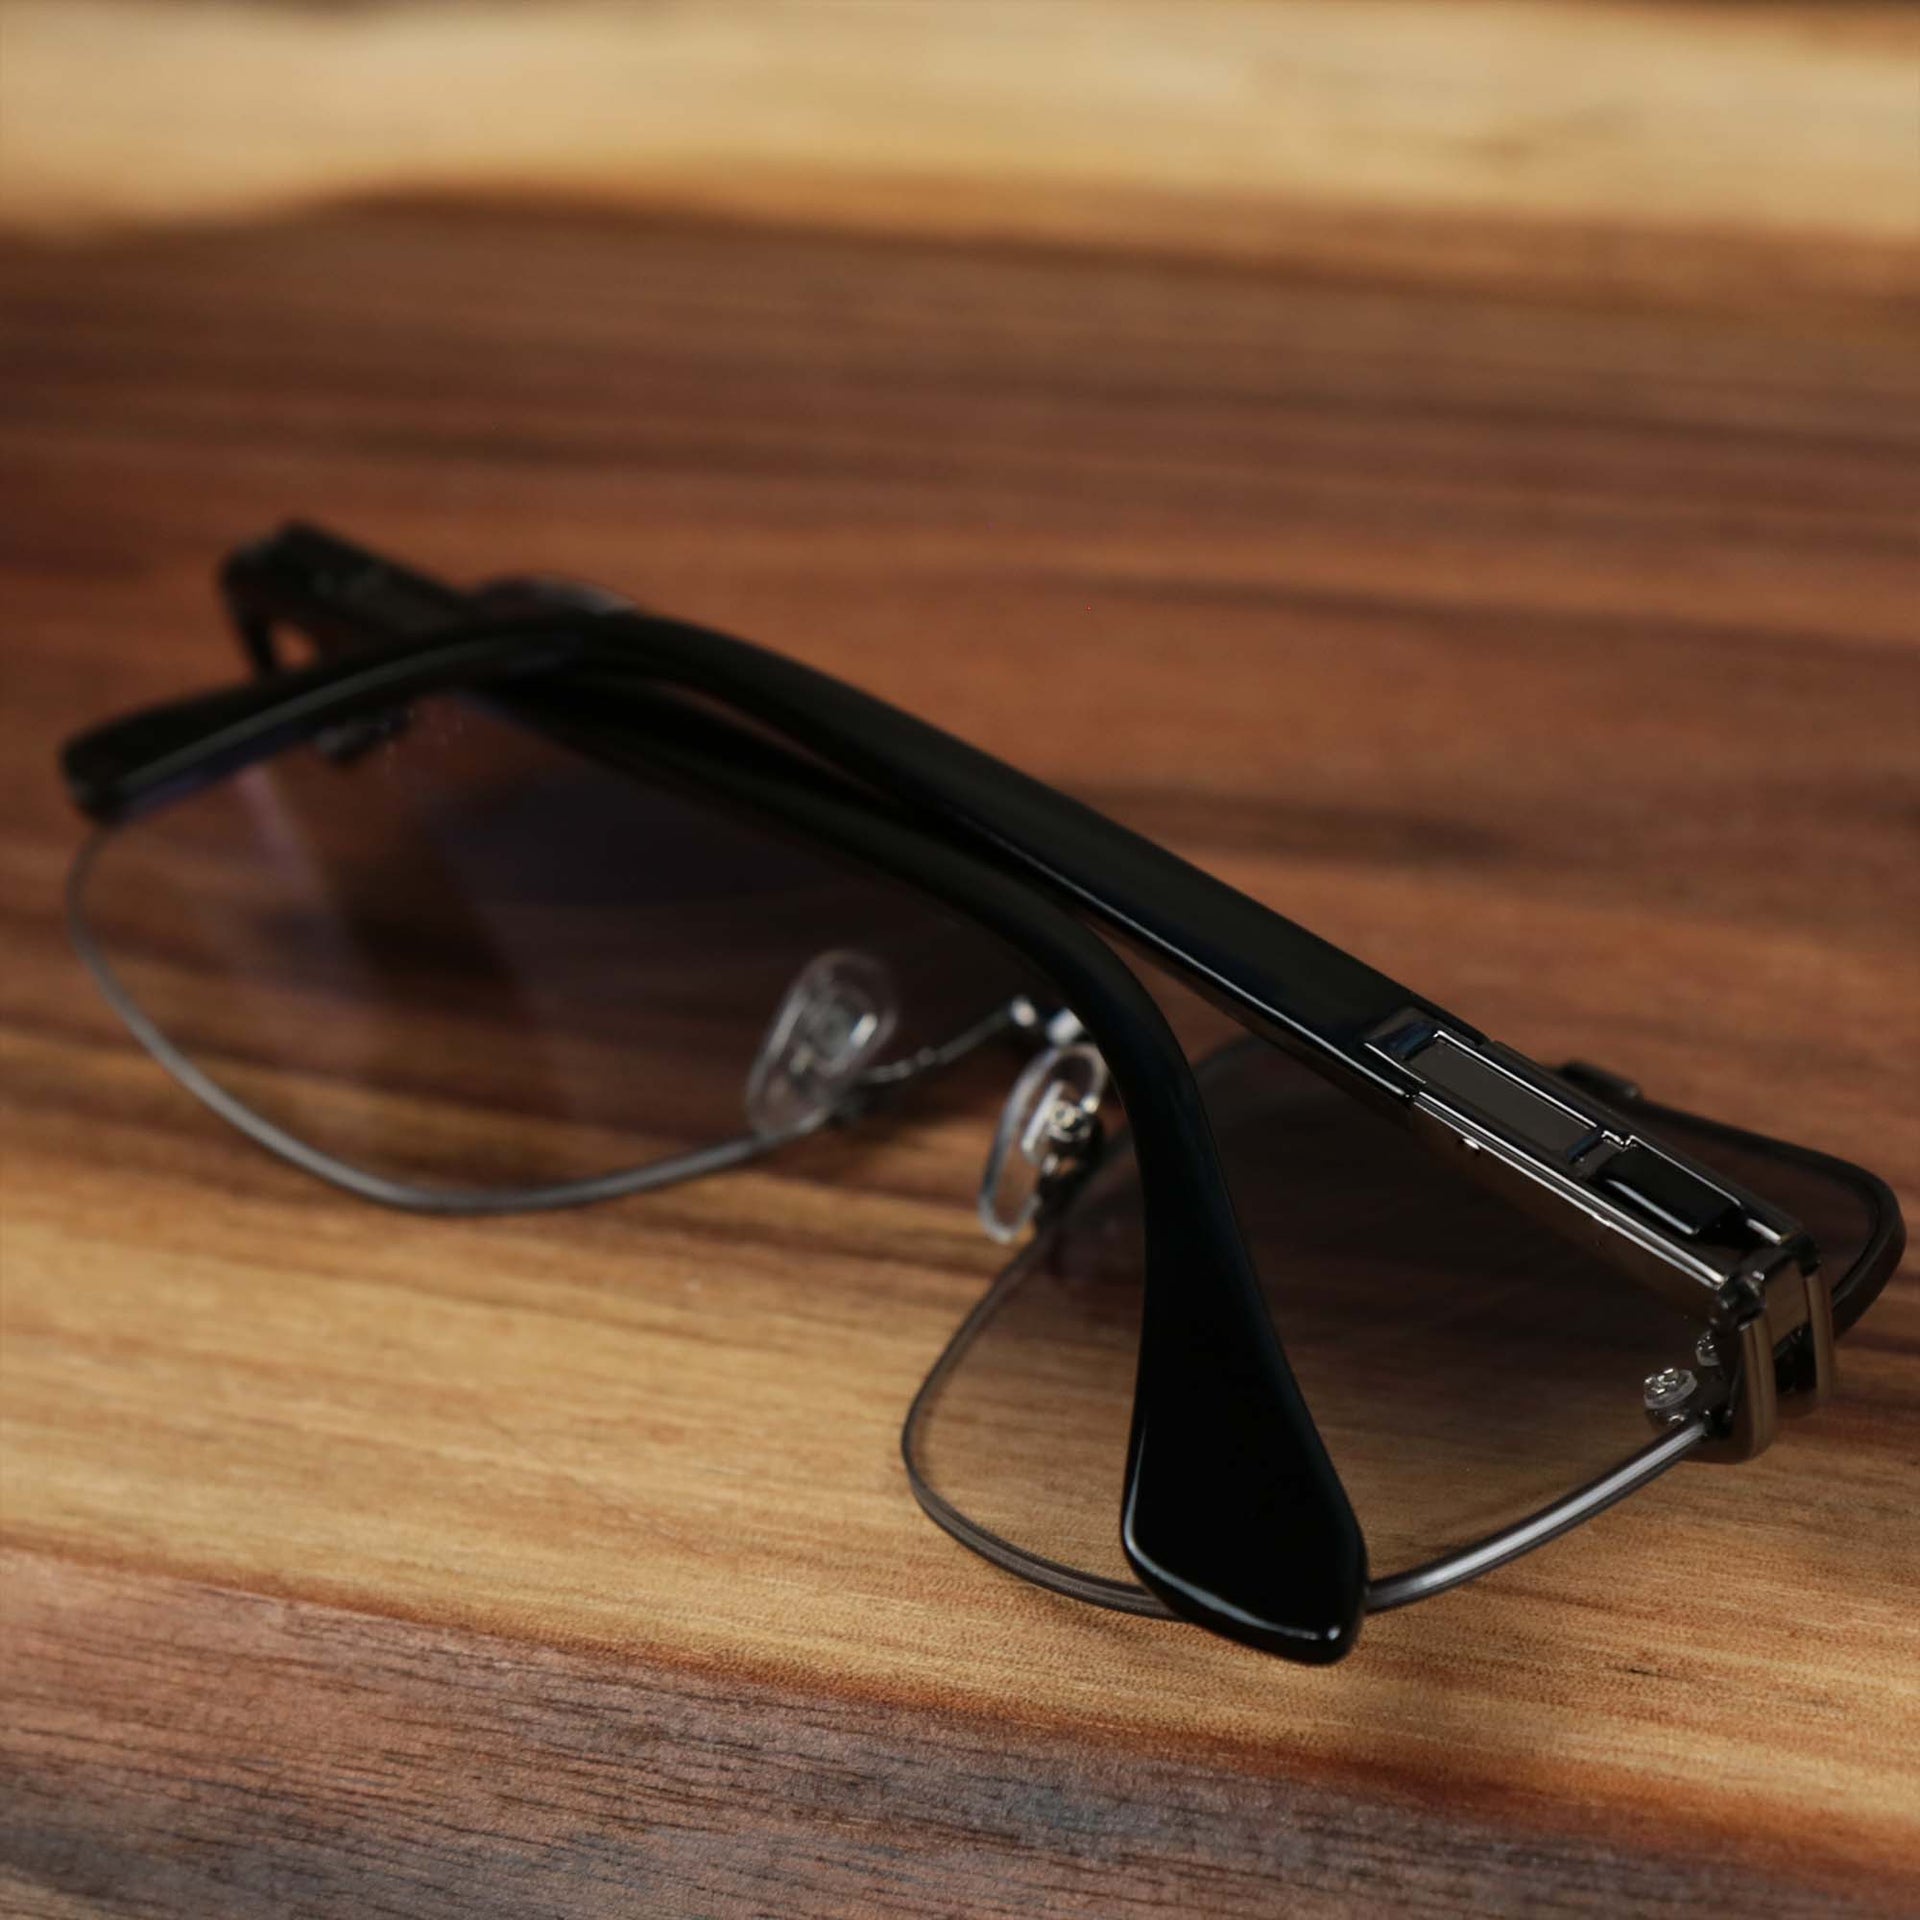 The Round Rectangle Frame Black Lens Sunglasses with Black Frame folded up